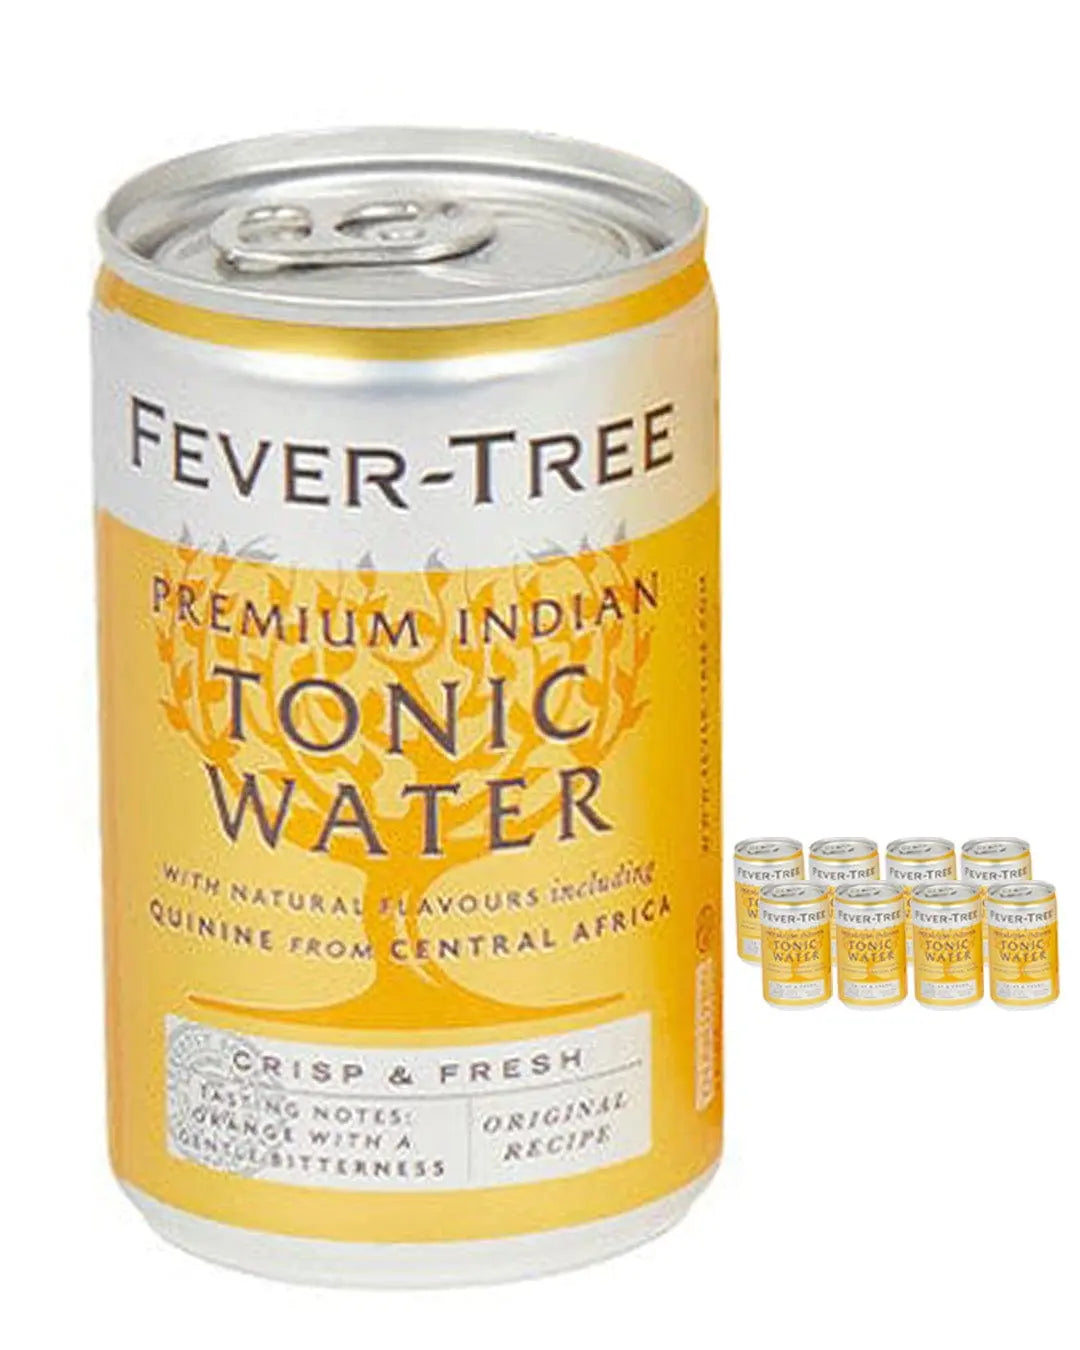 Fever-Tree Premium Indian Tonic Water Fridge Pack, 8 x 150 ml Tonics 05060108451024